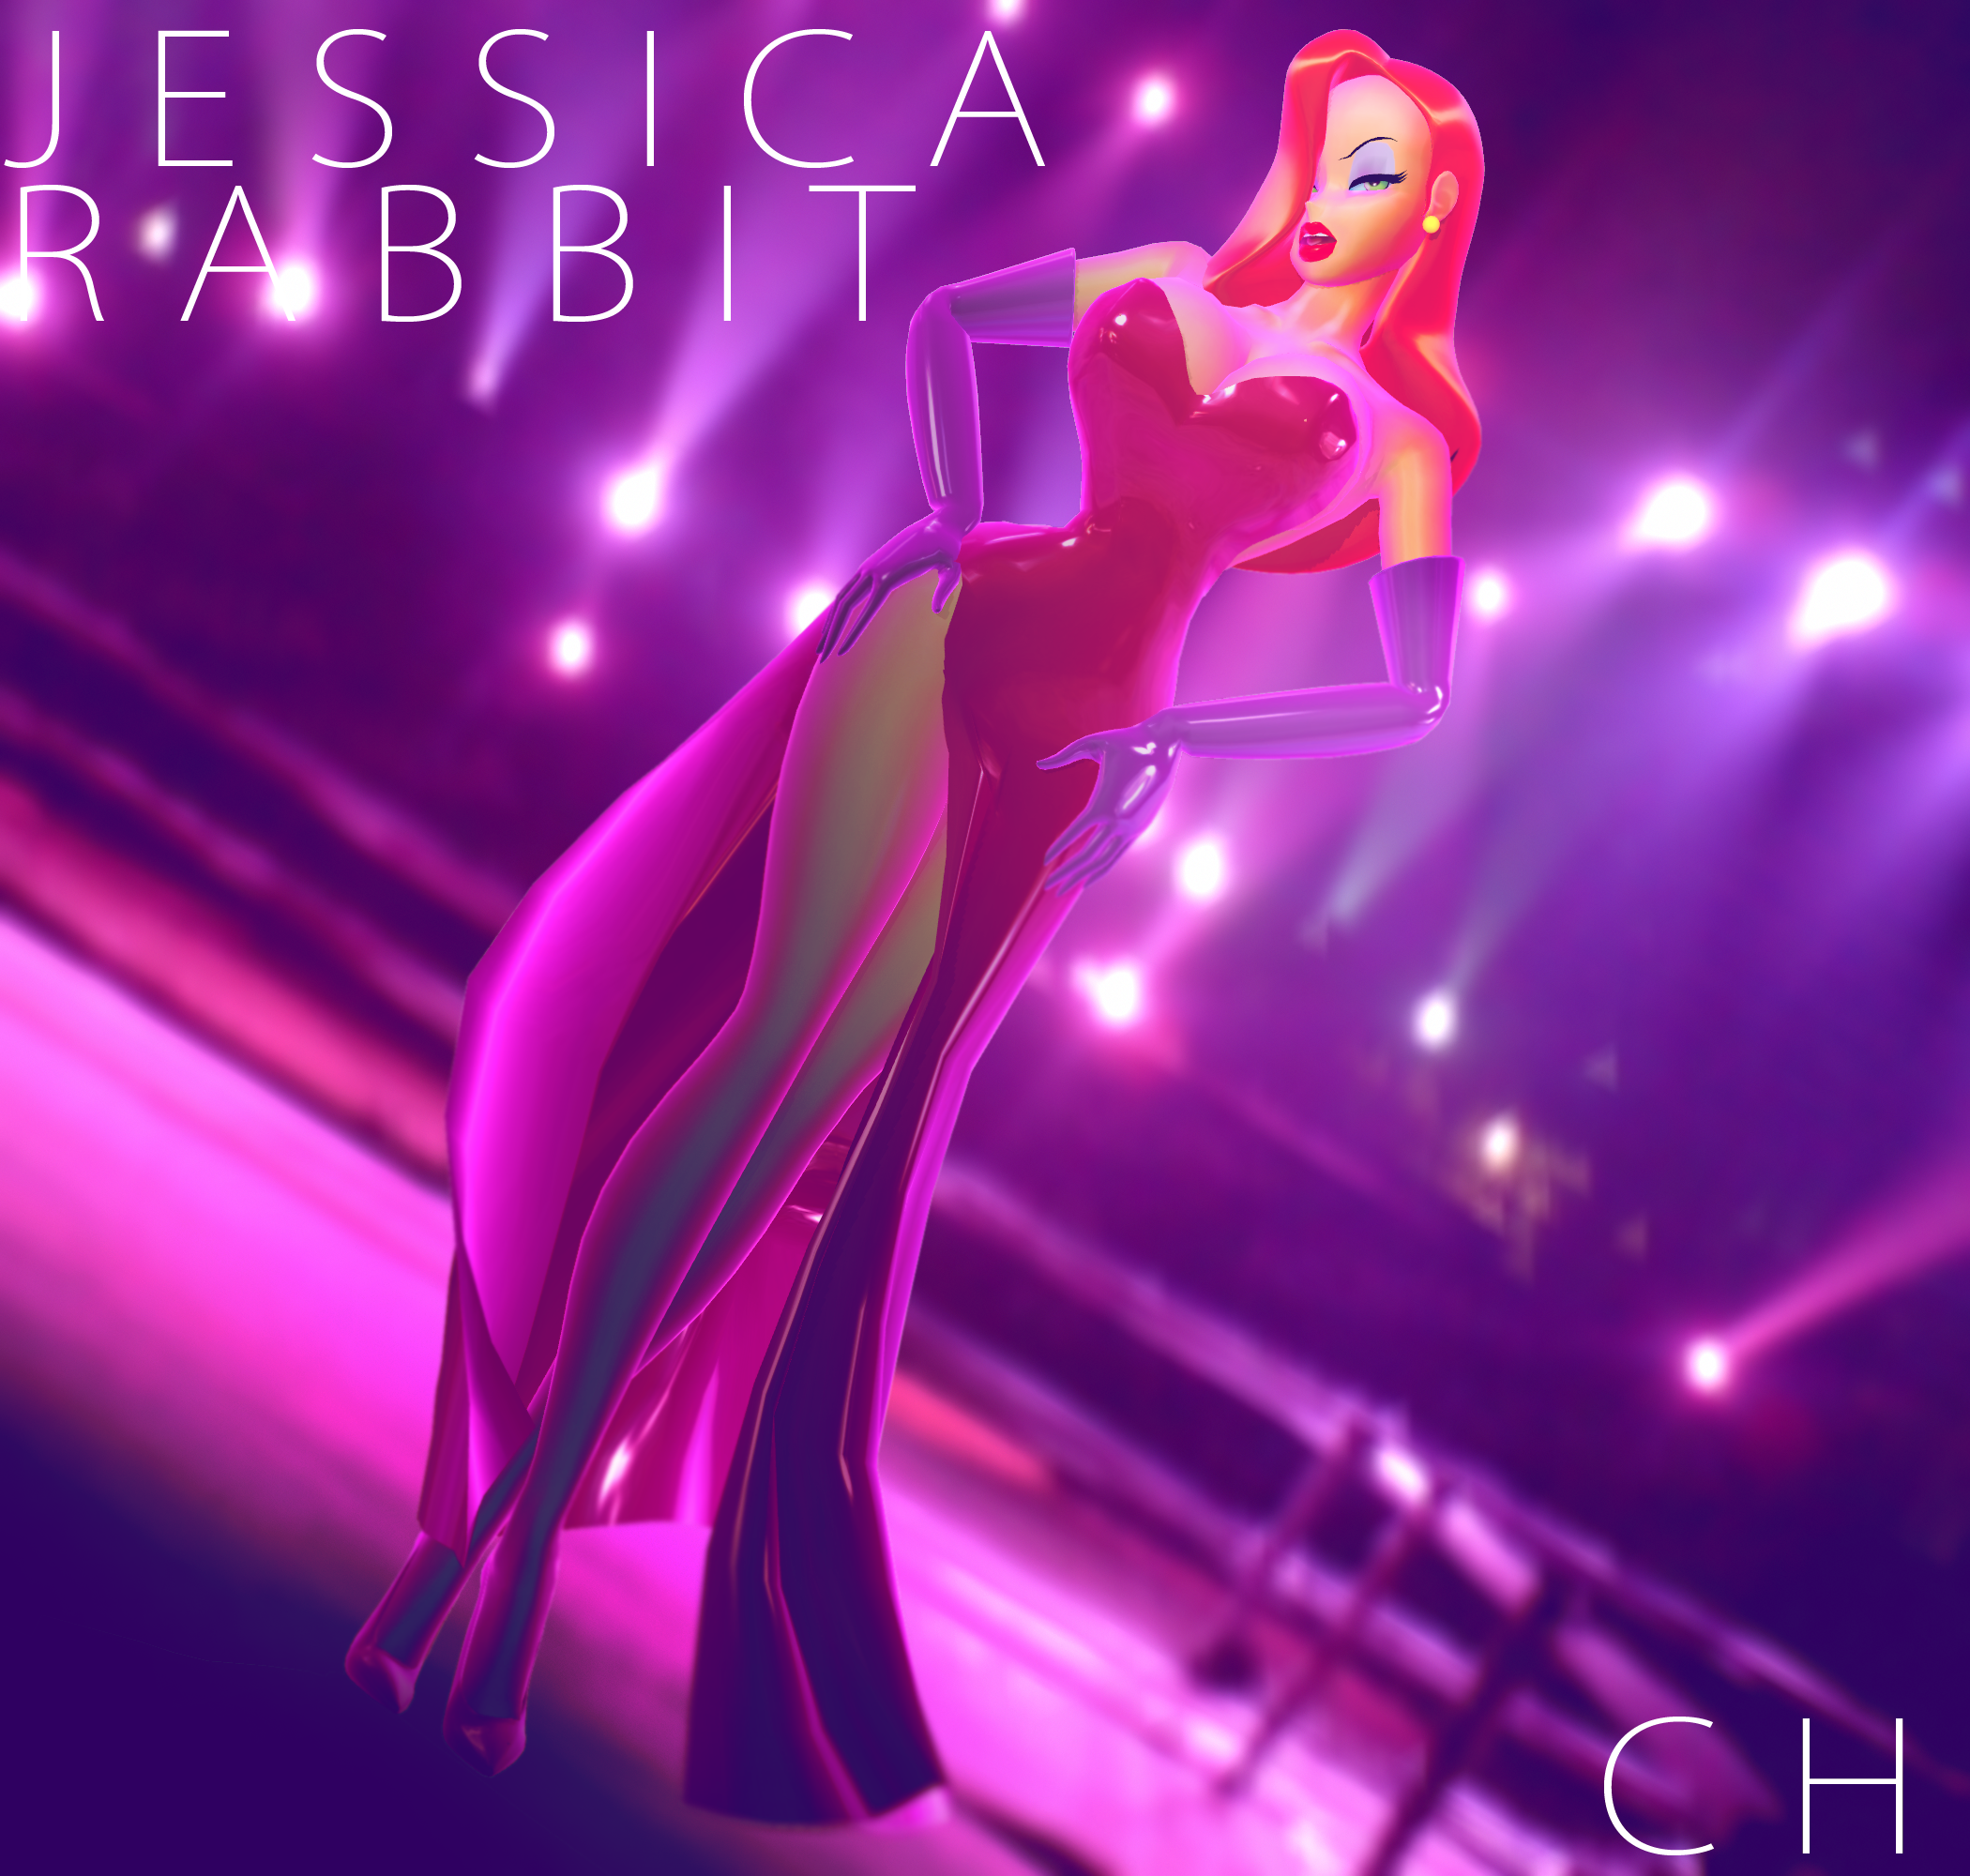 Jessica Rabbit Model by chatterHEAD on